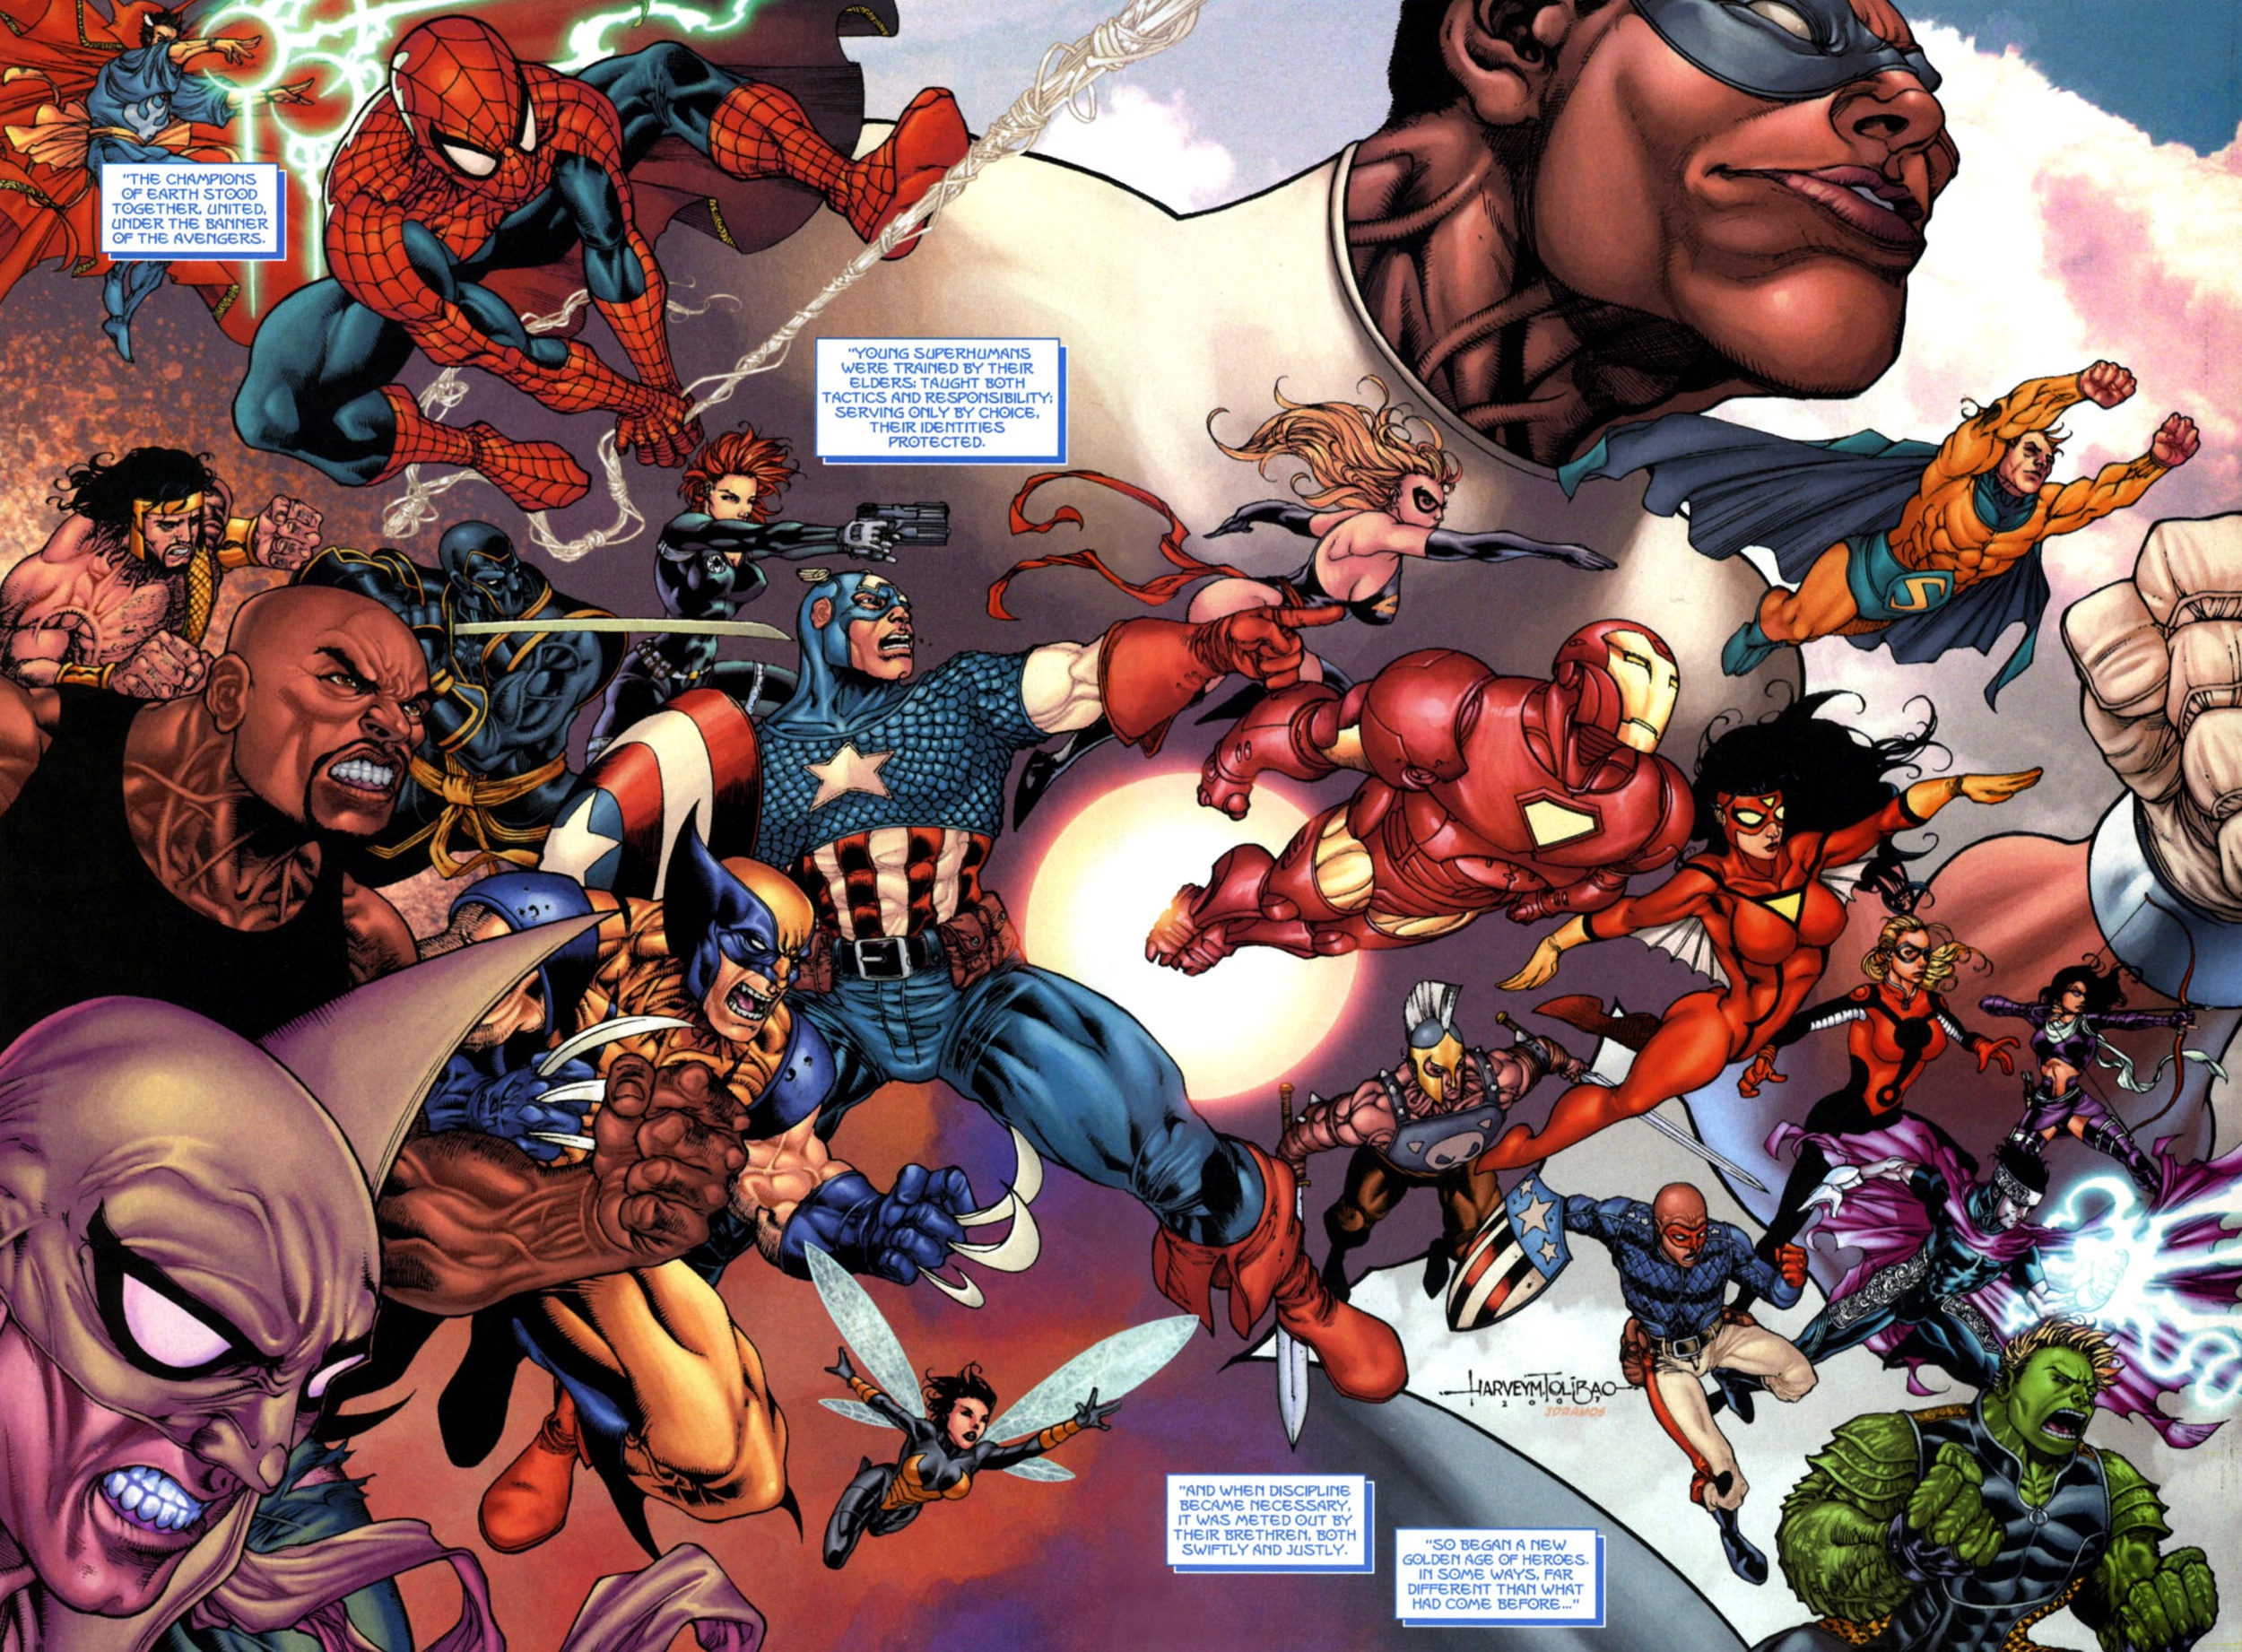 Iron Man, Spider-Man, Captain America, Wolverine, Marvel Comics - desktop wallpaper